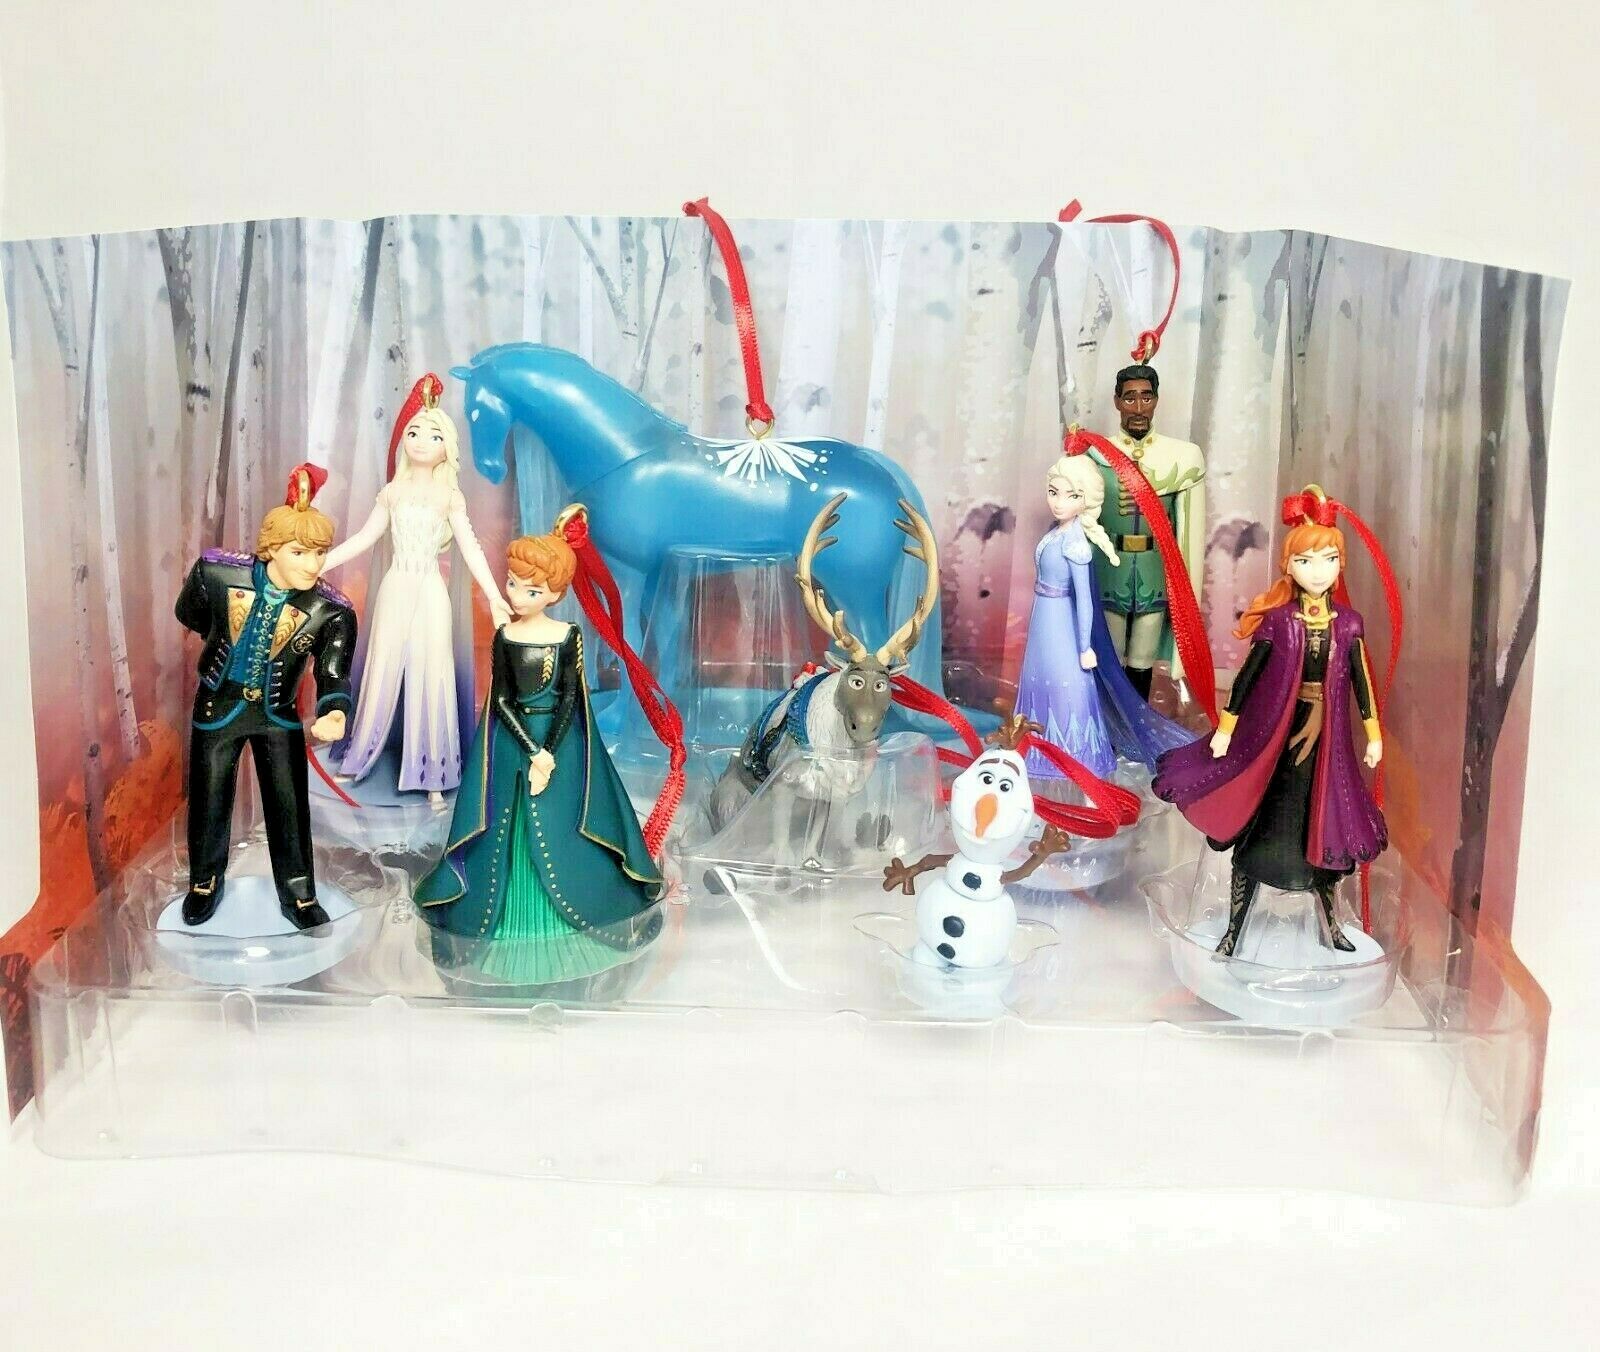 Personalized Frozen Ornament, Elsa Christmas Ornament, Anna